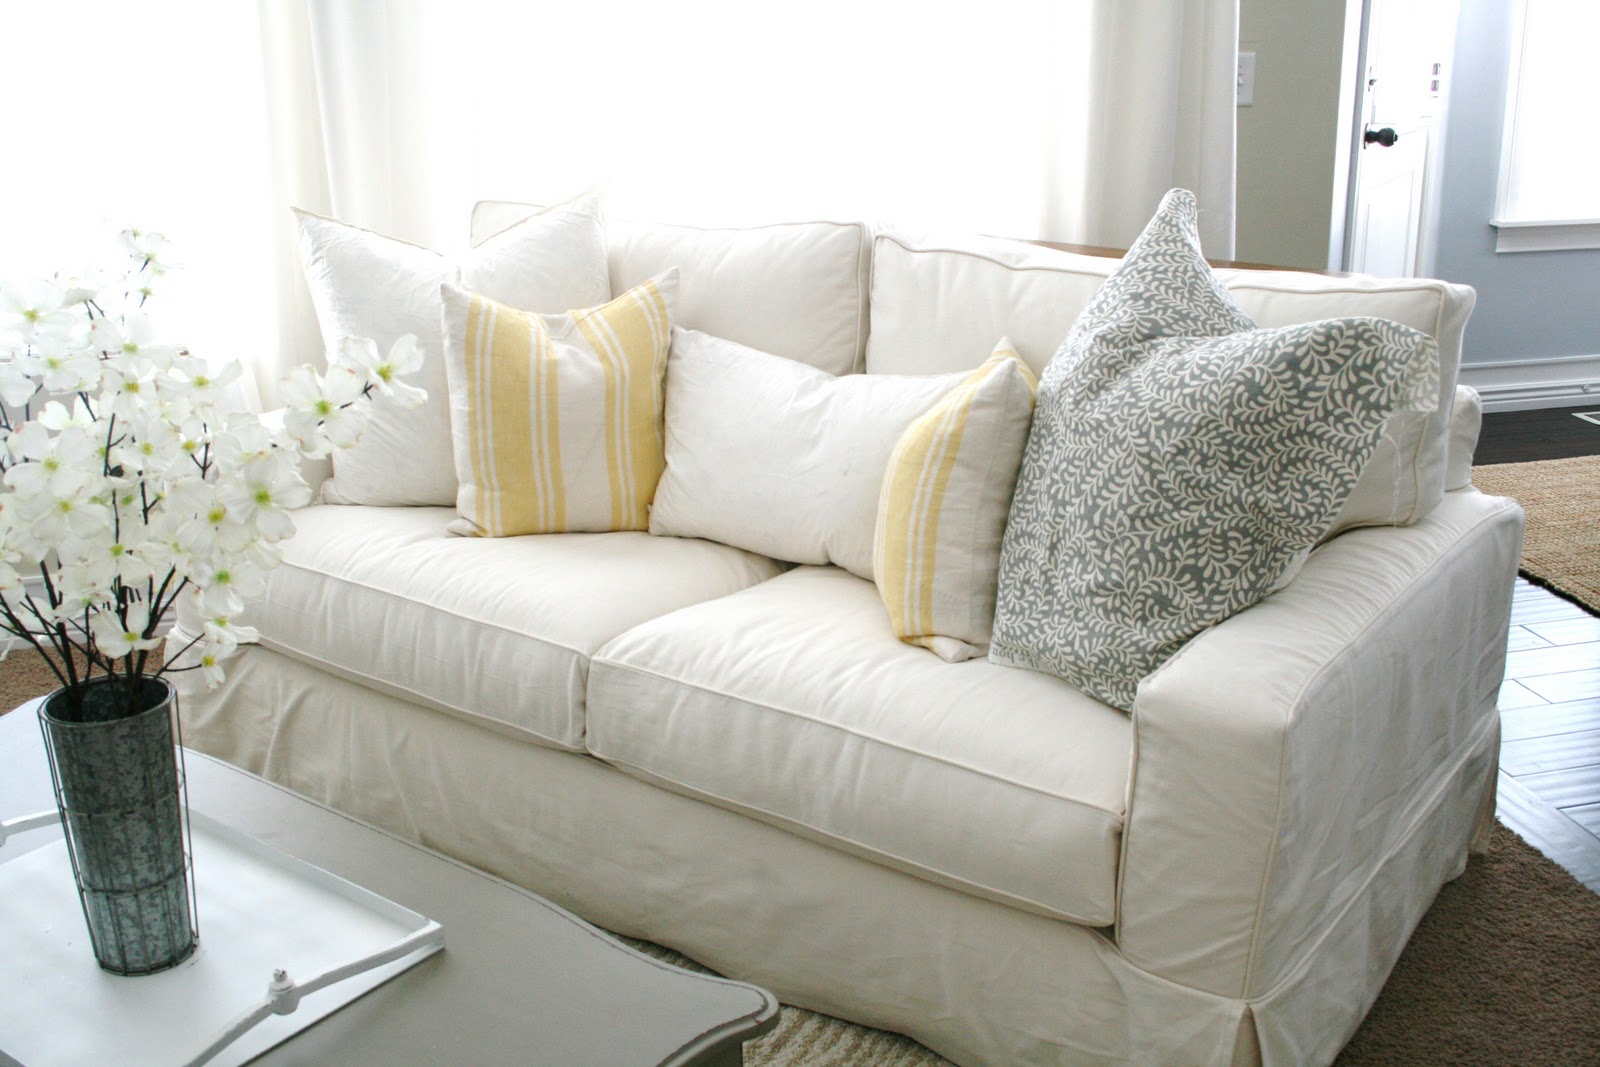 Фото дивана с подушками. Диван с мягкими подушками. Подушка для дивана. Белый диван с подушками. Декоративные подушки на диван в интерьере.